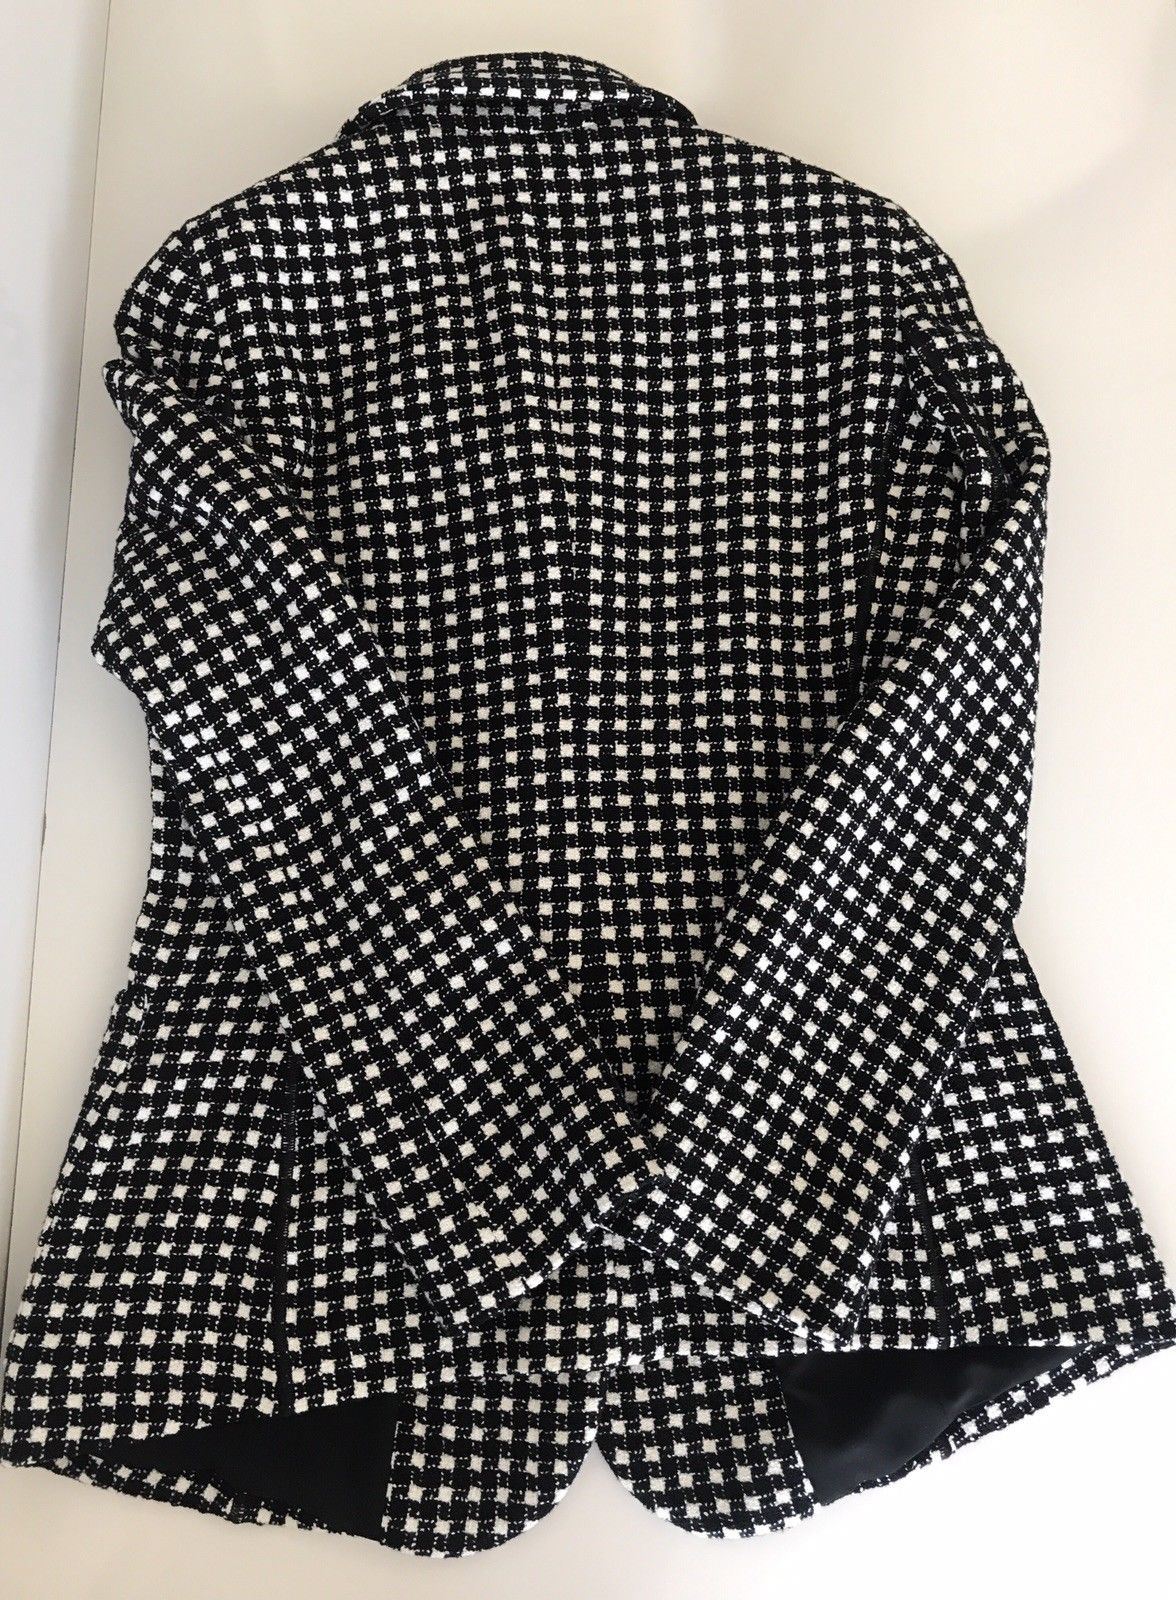 NWT $1395 Armani Collezioni Women’s Black Blazer Jacket Size 4 (40 Euro) TMG25T